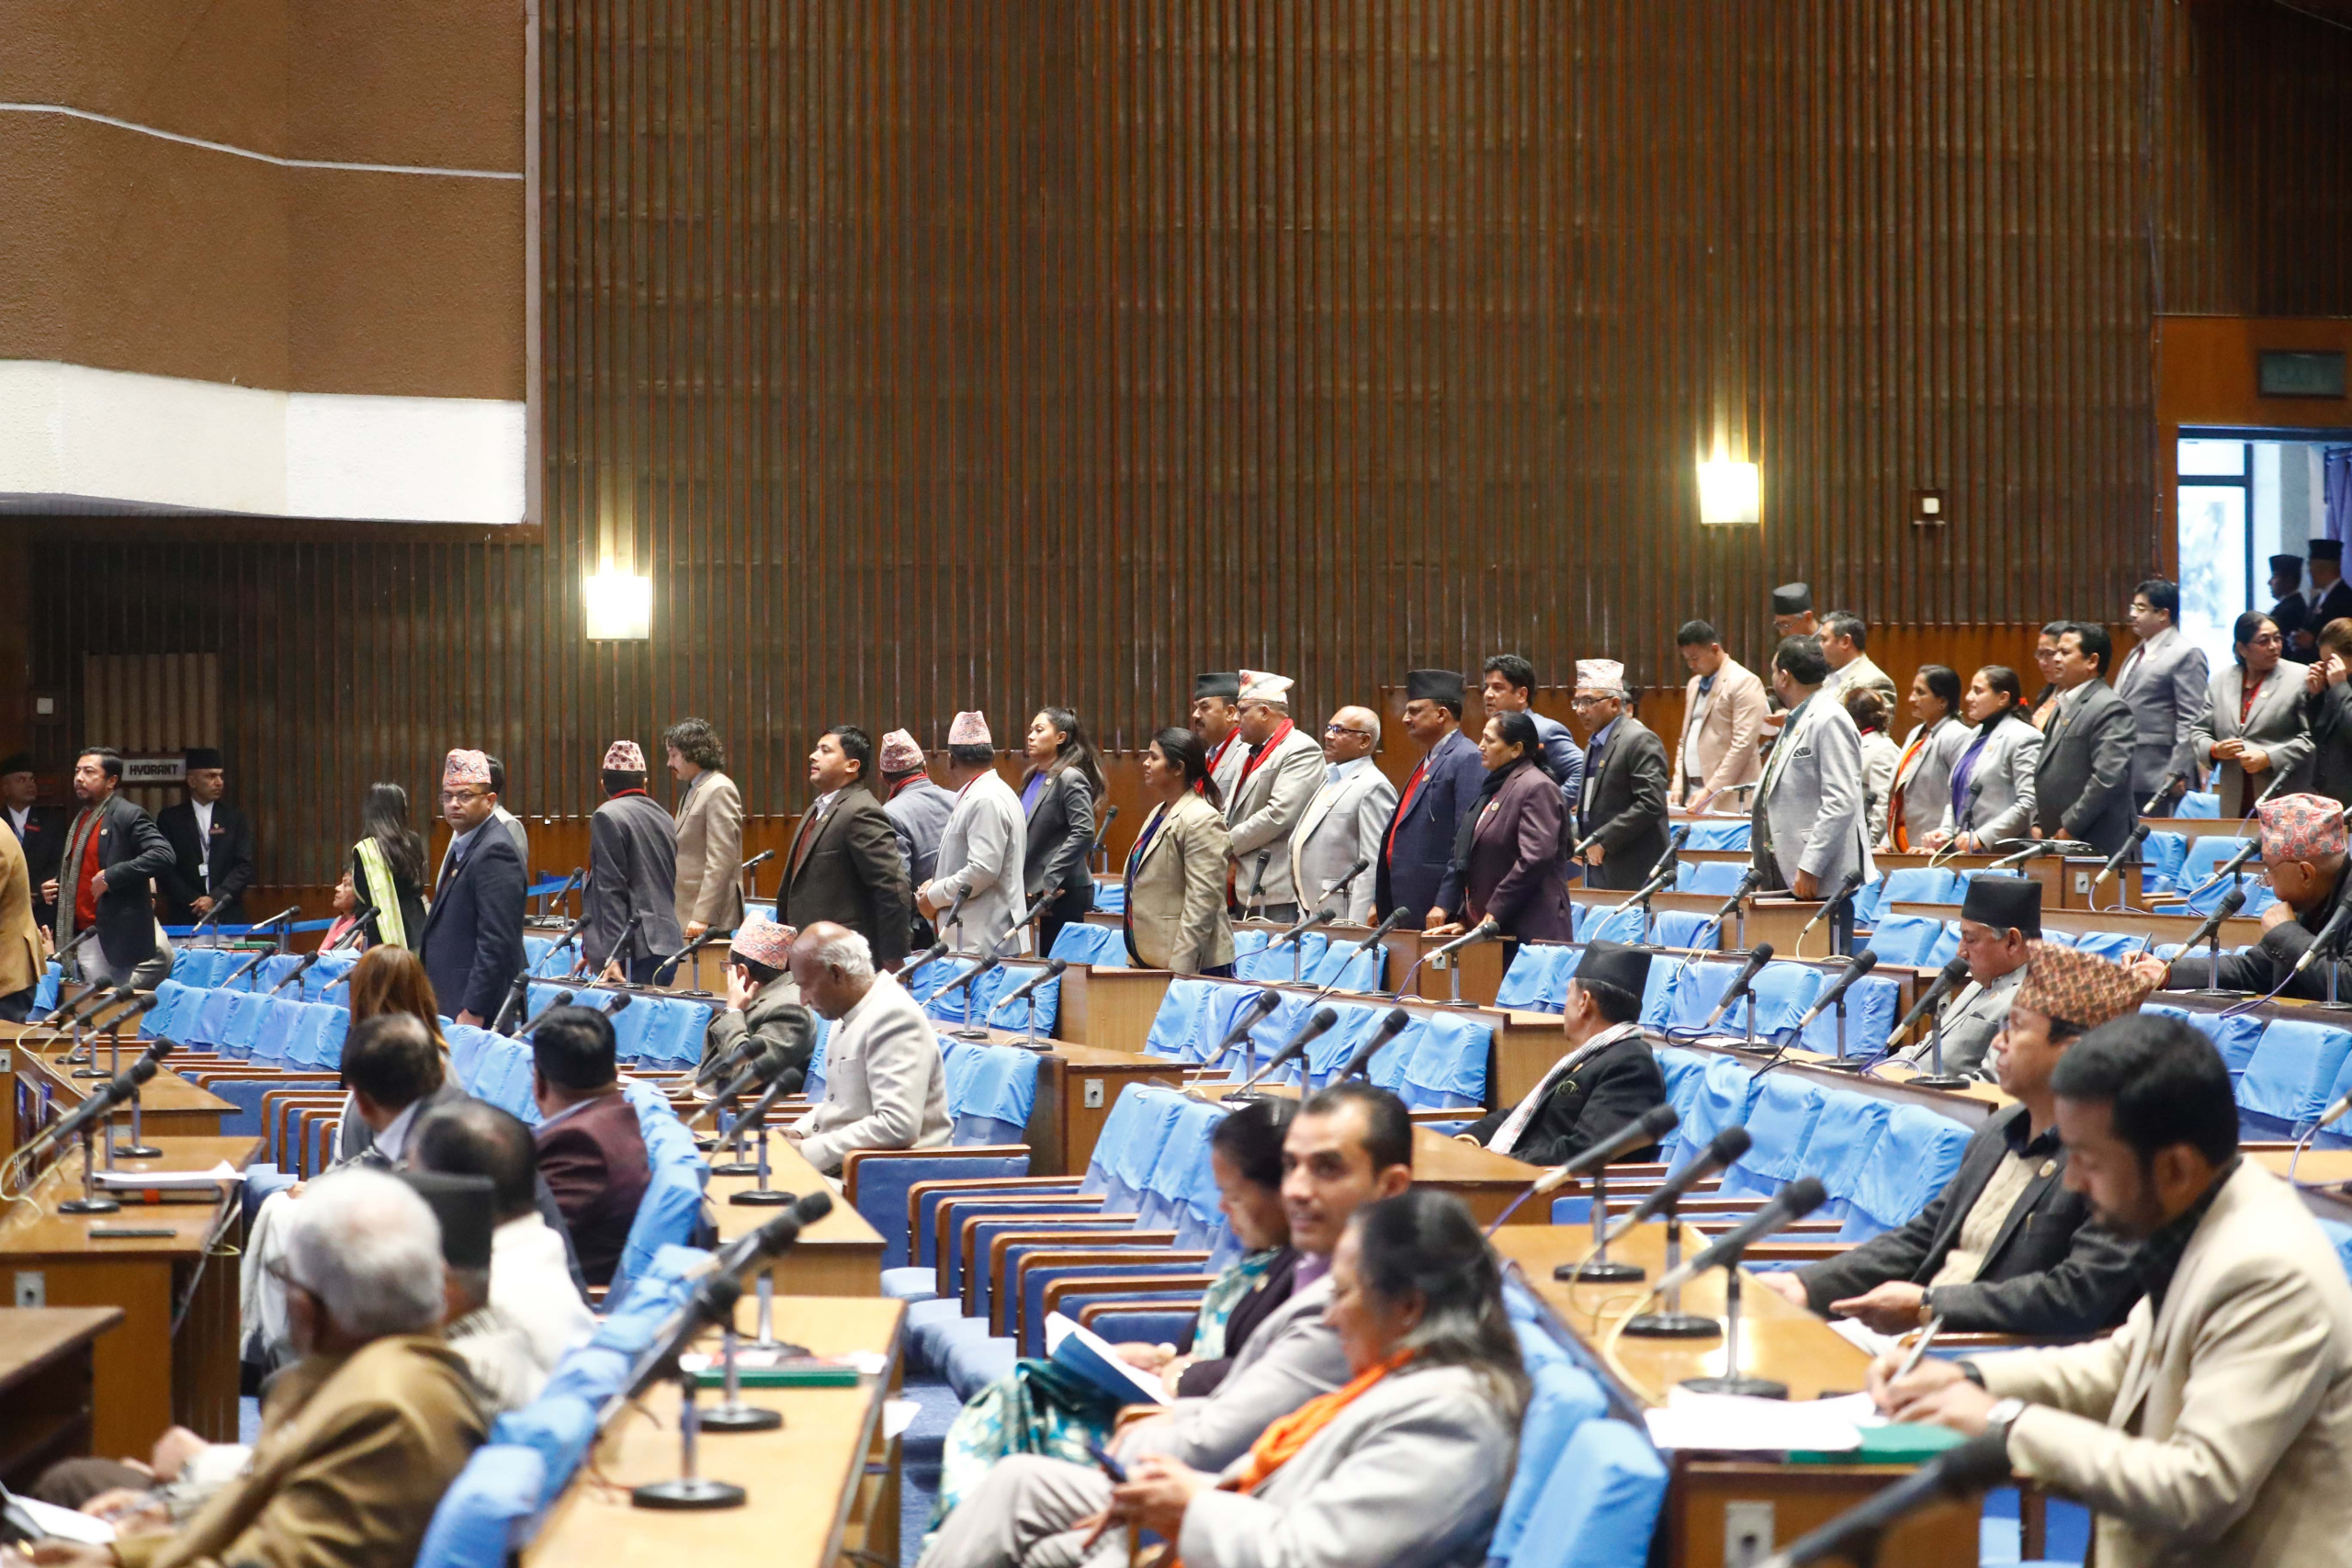 प्रतिपक्षी दलको अवरोधपछि संसद् बैठक स्थगित